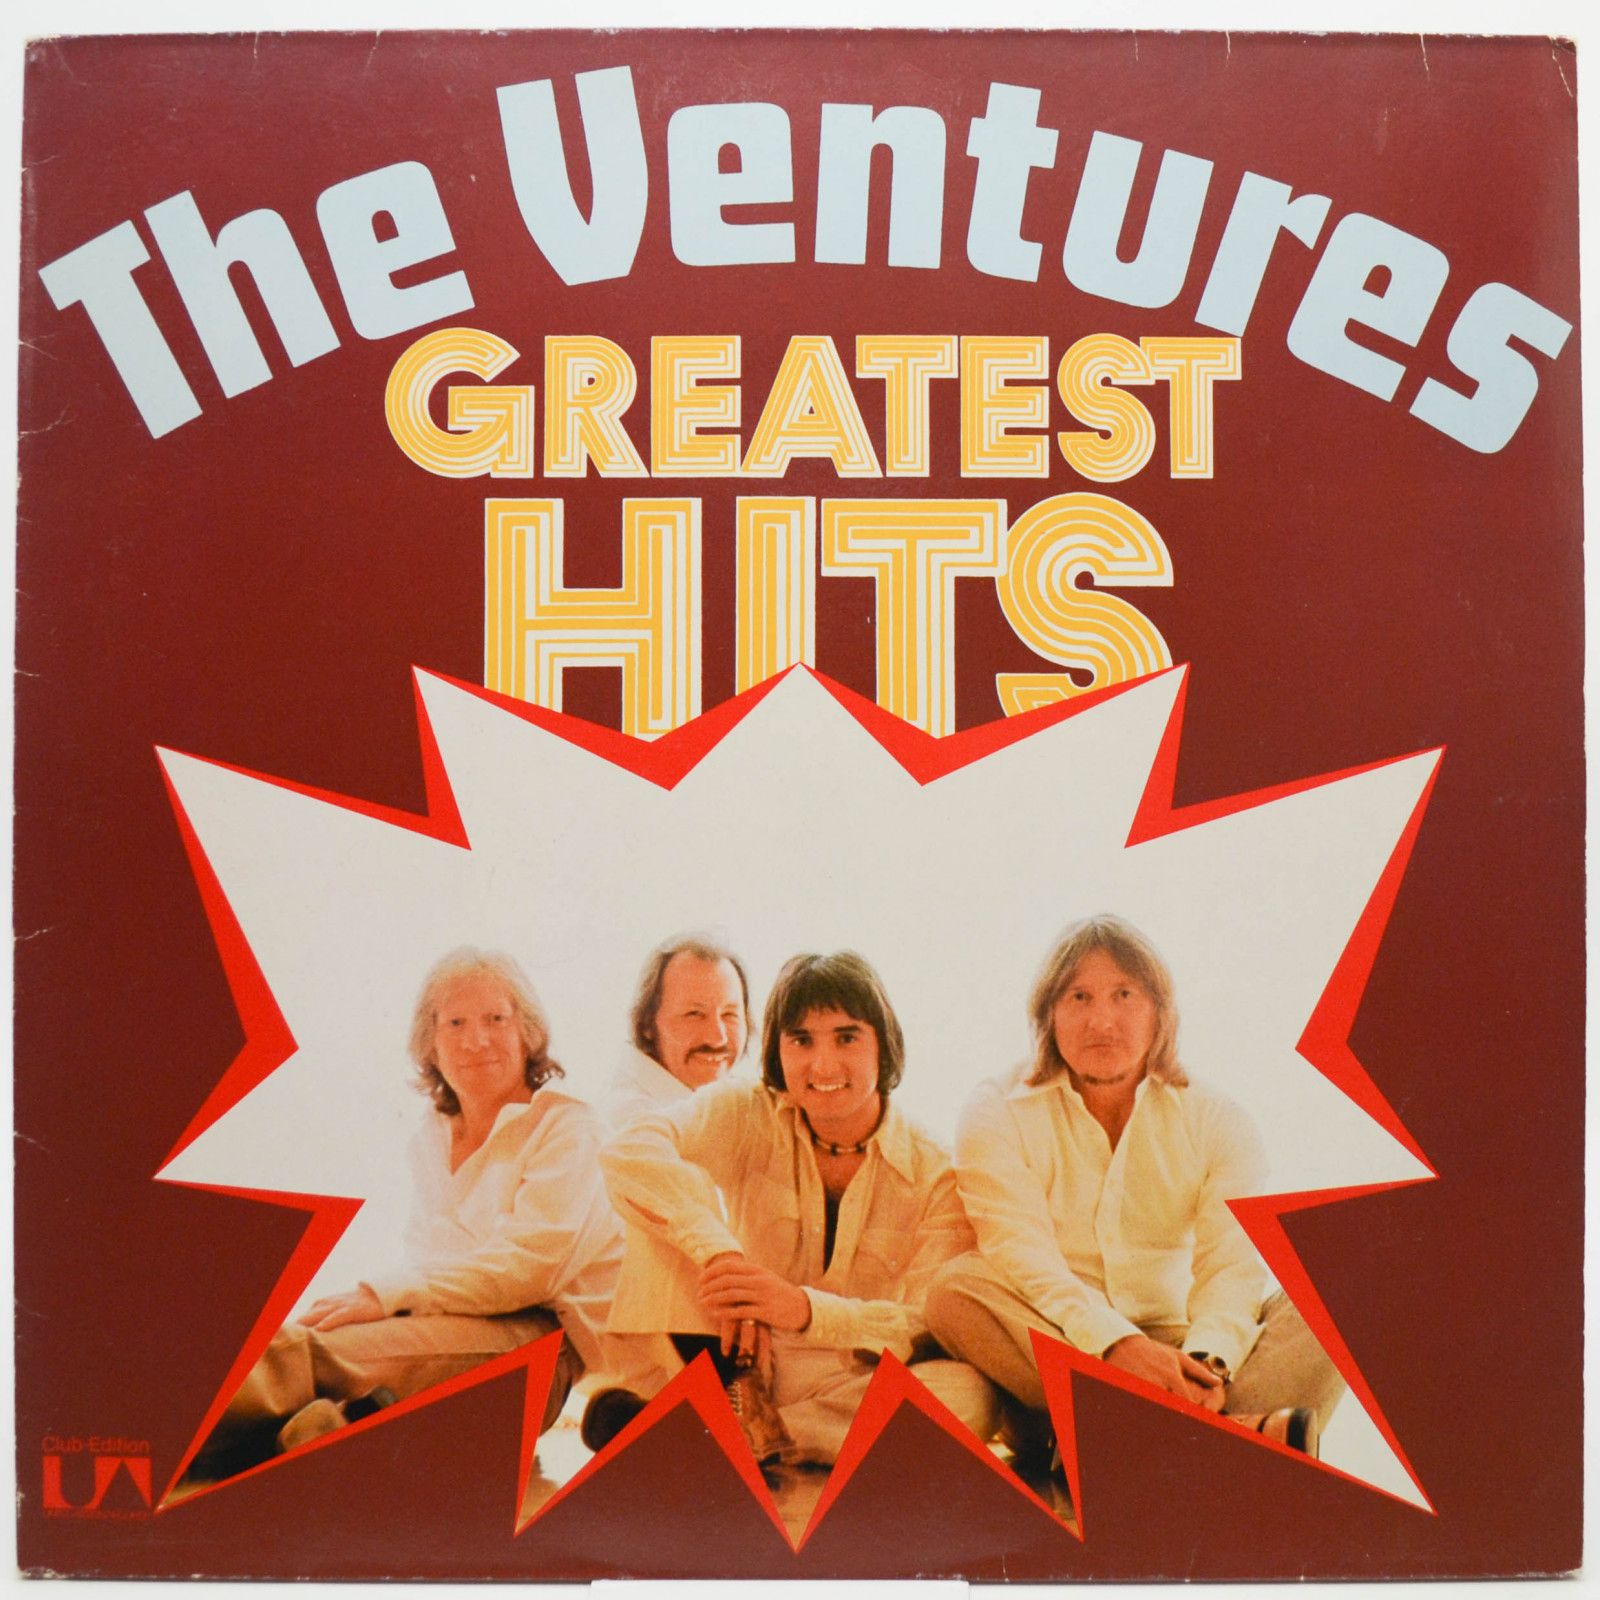 Ventures — Greatest Hits, 1978